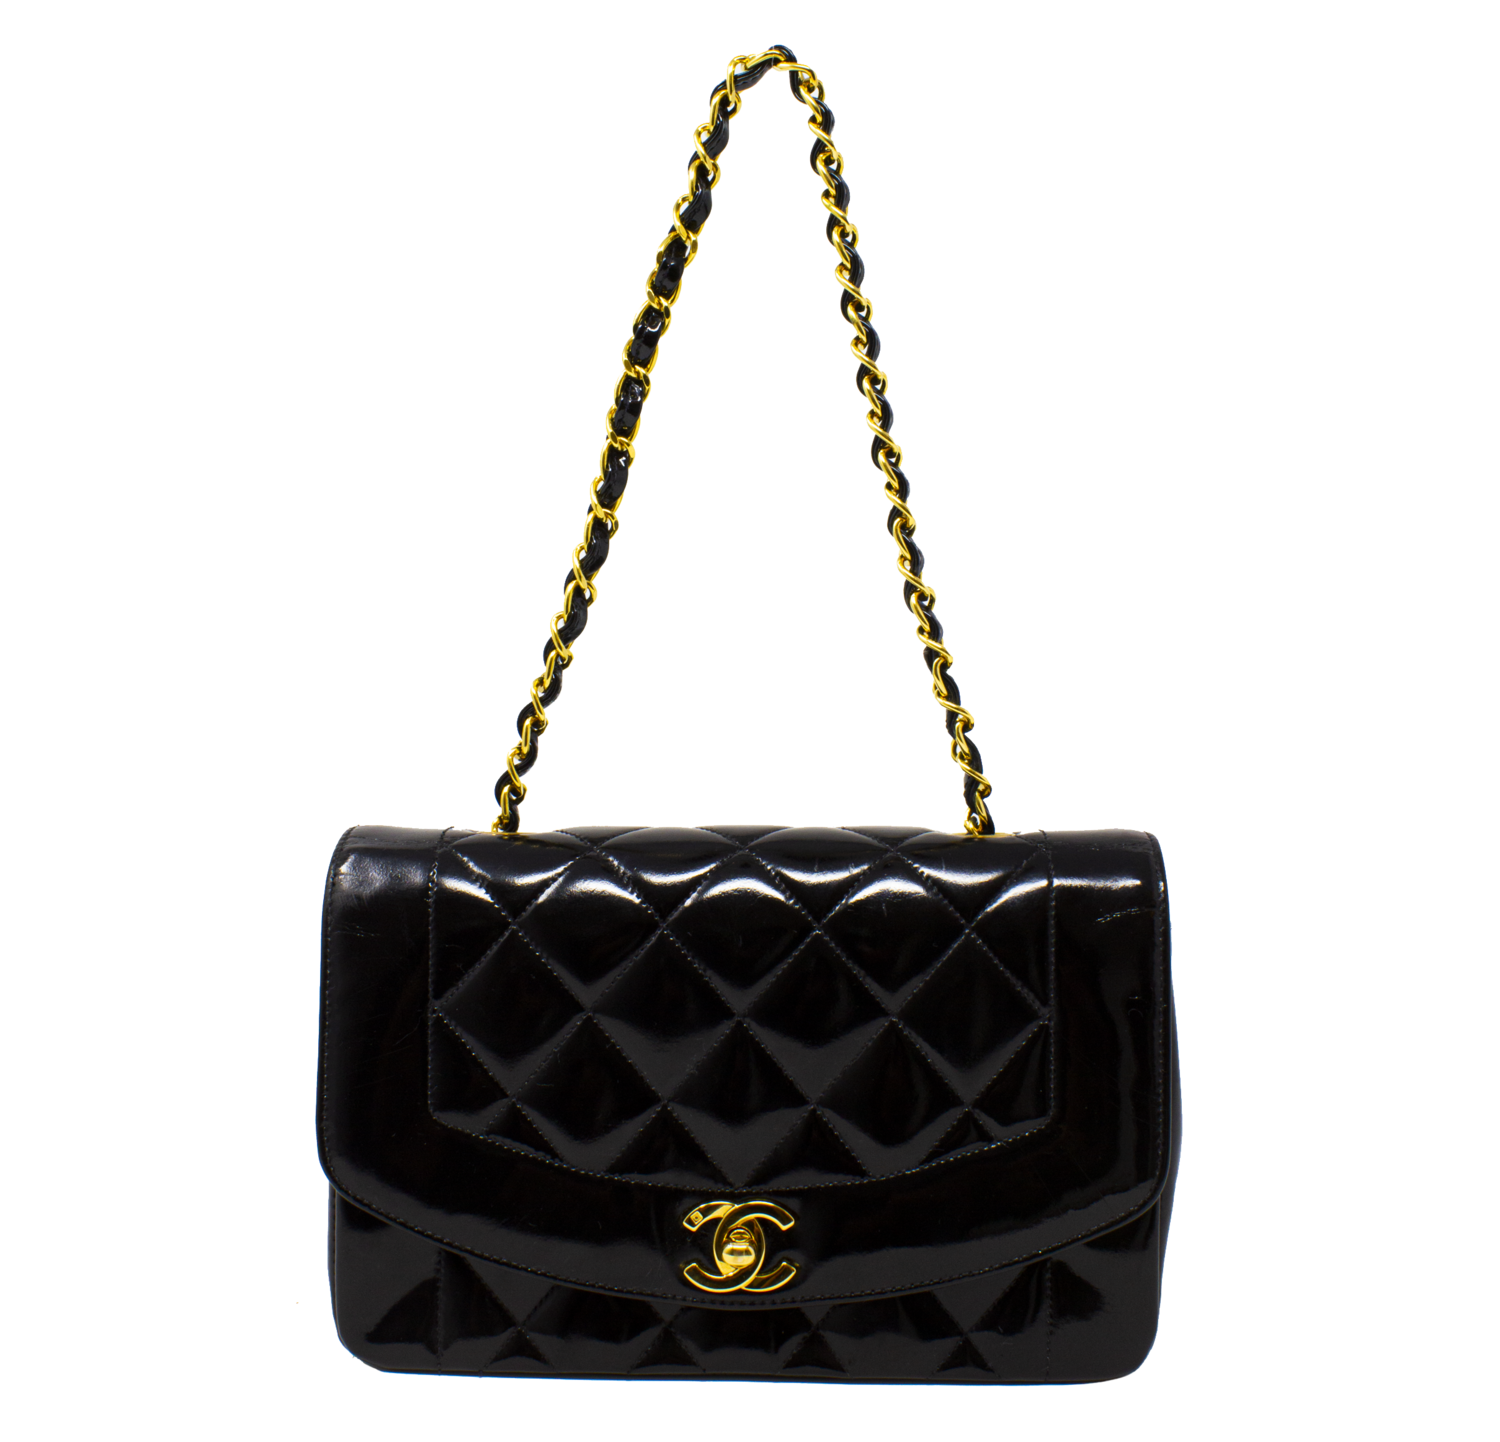 Chanel Black Patent Diana Flap Bag